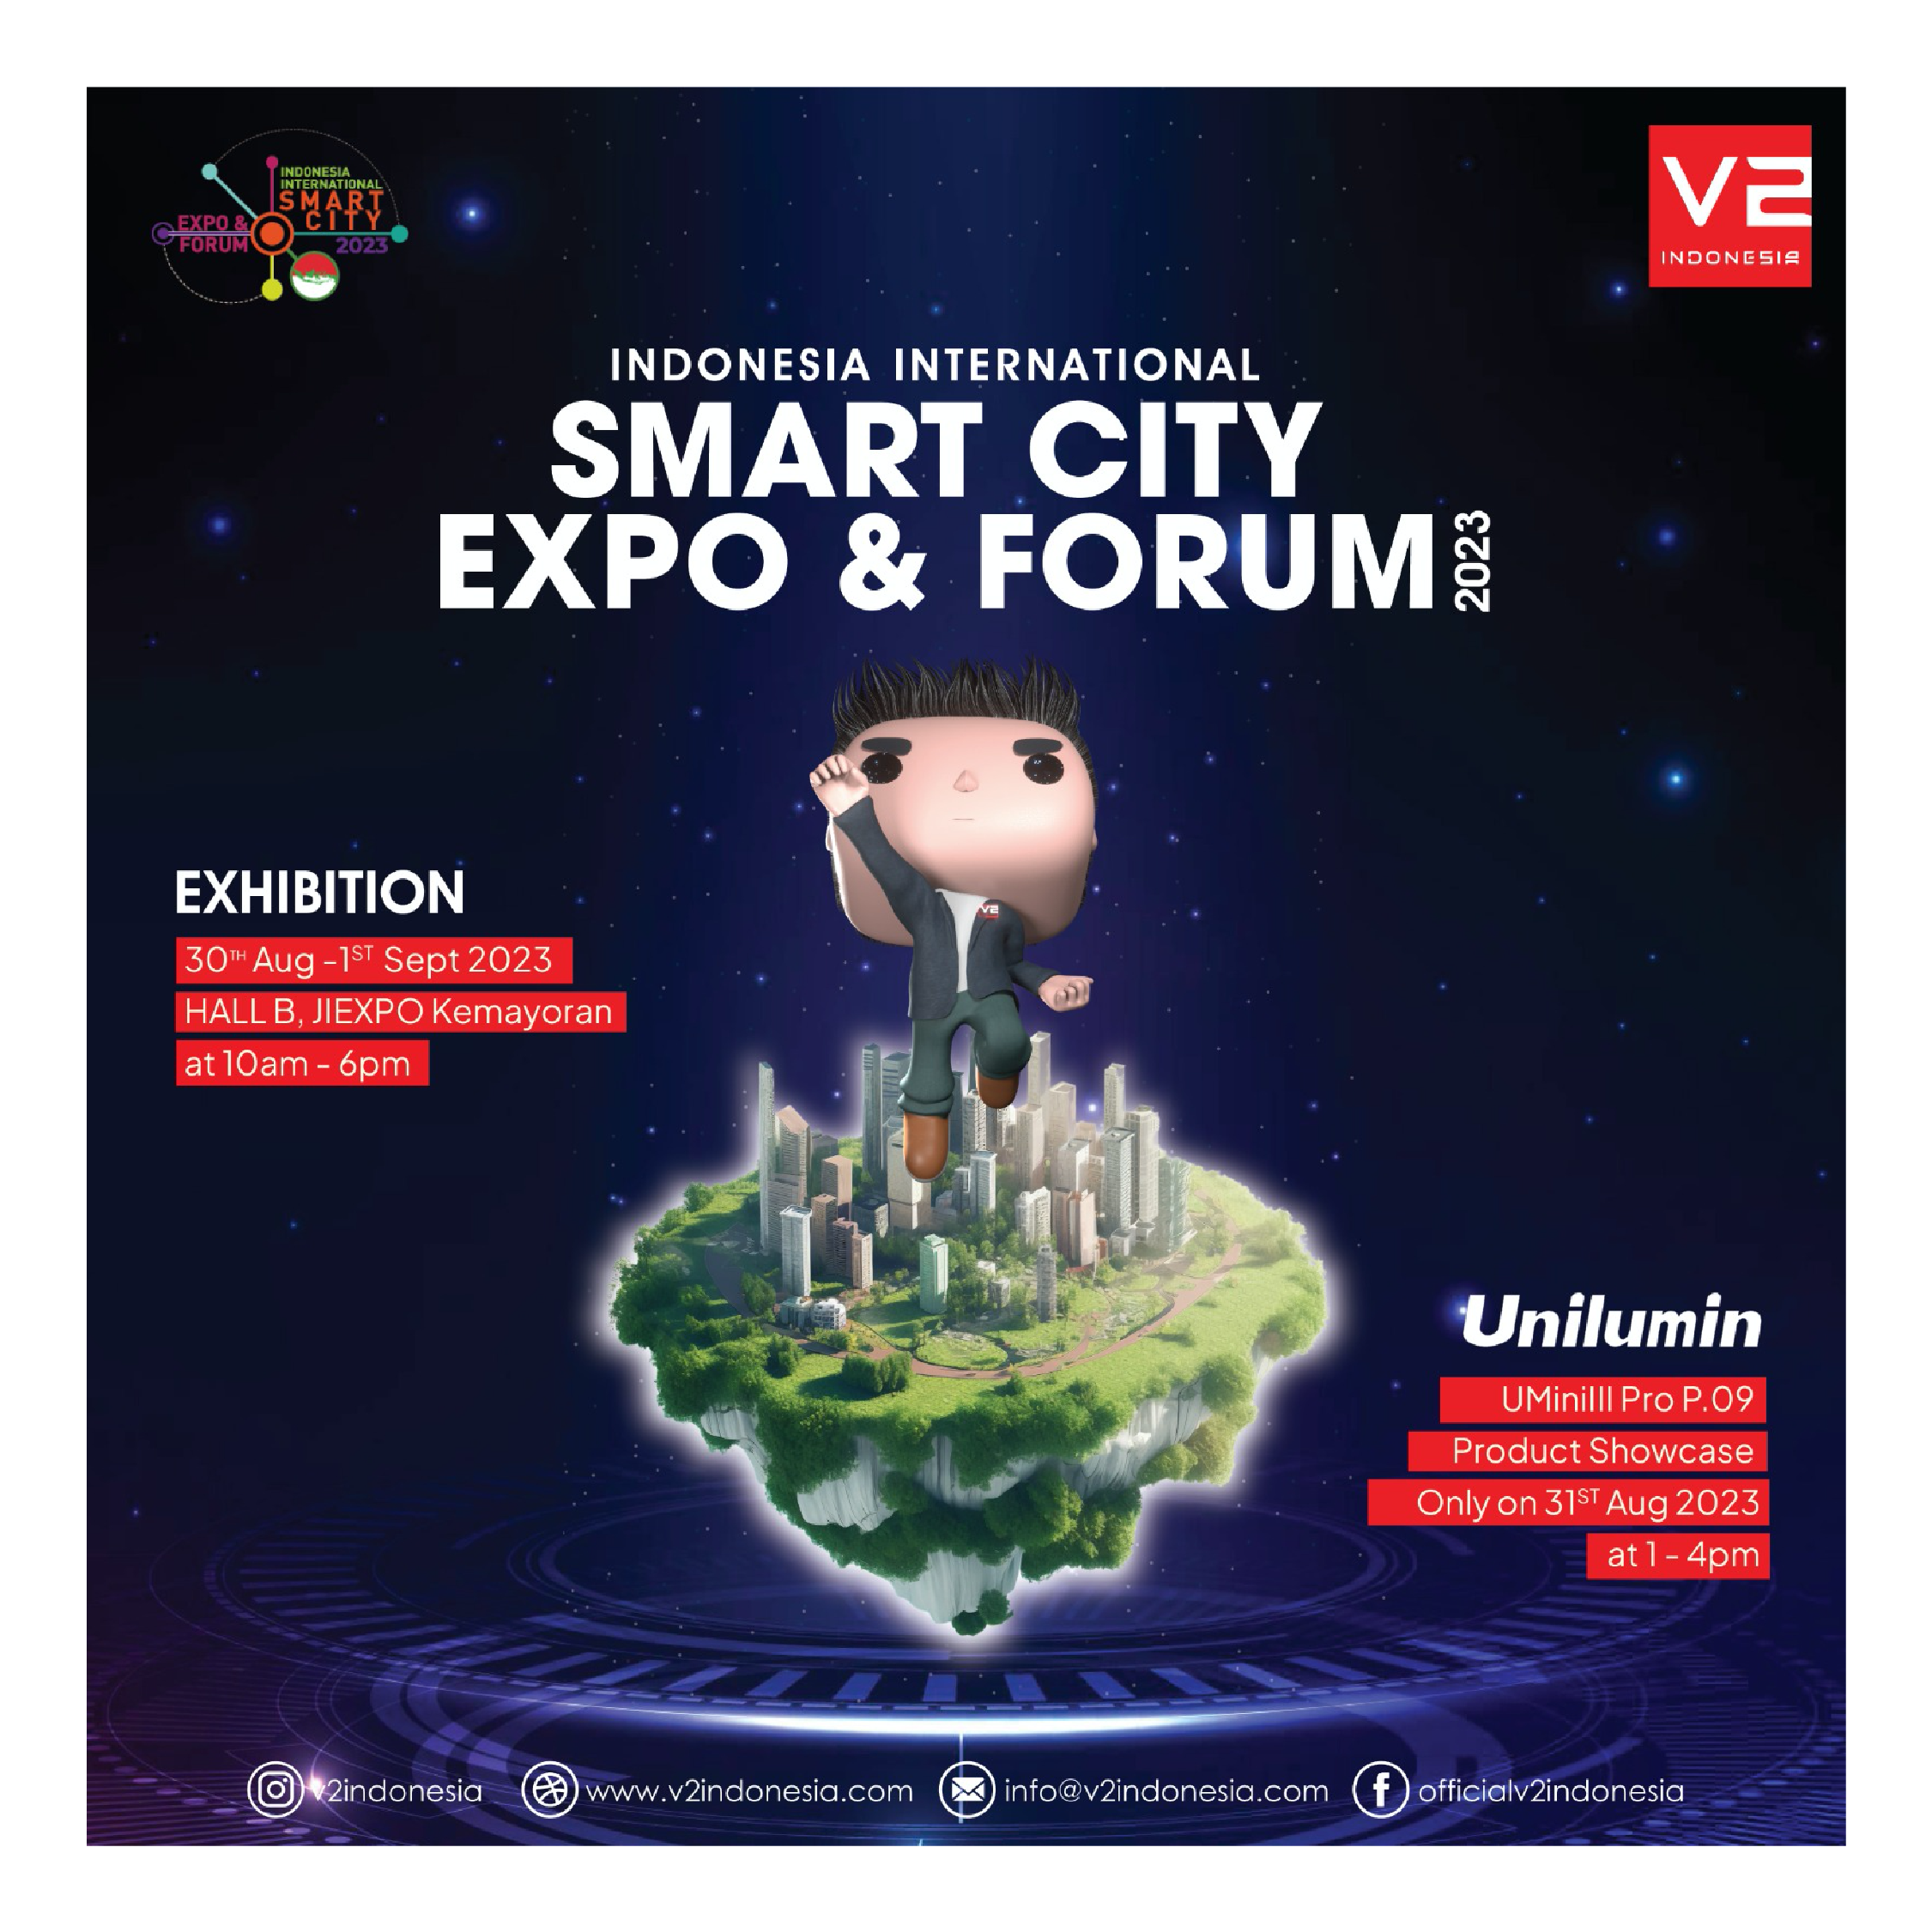 Indonesia International Smart City Expo & Forum 2023